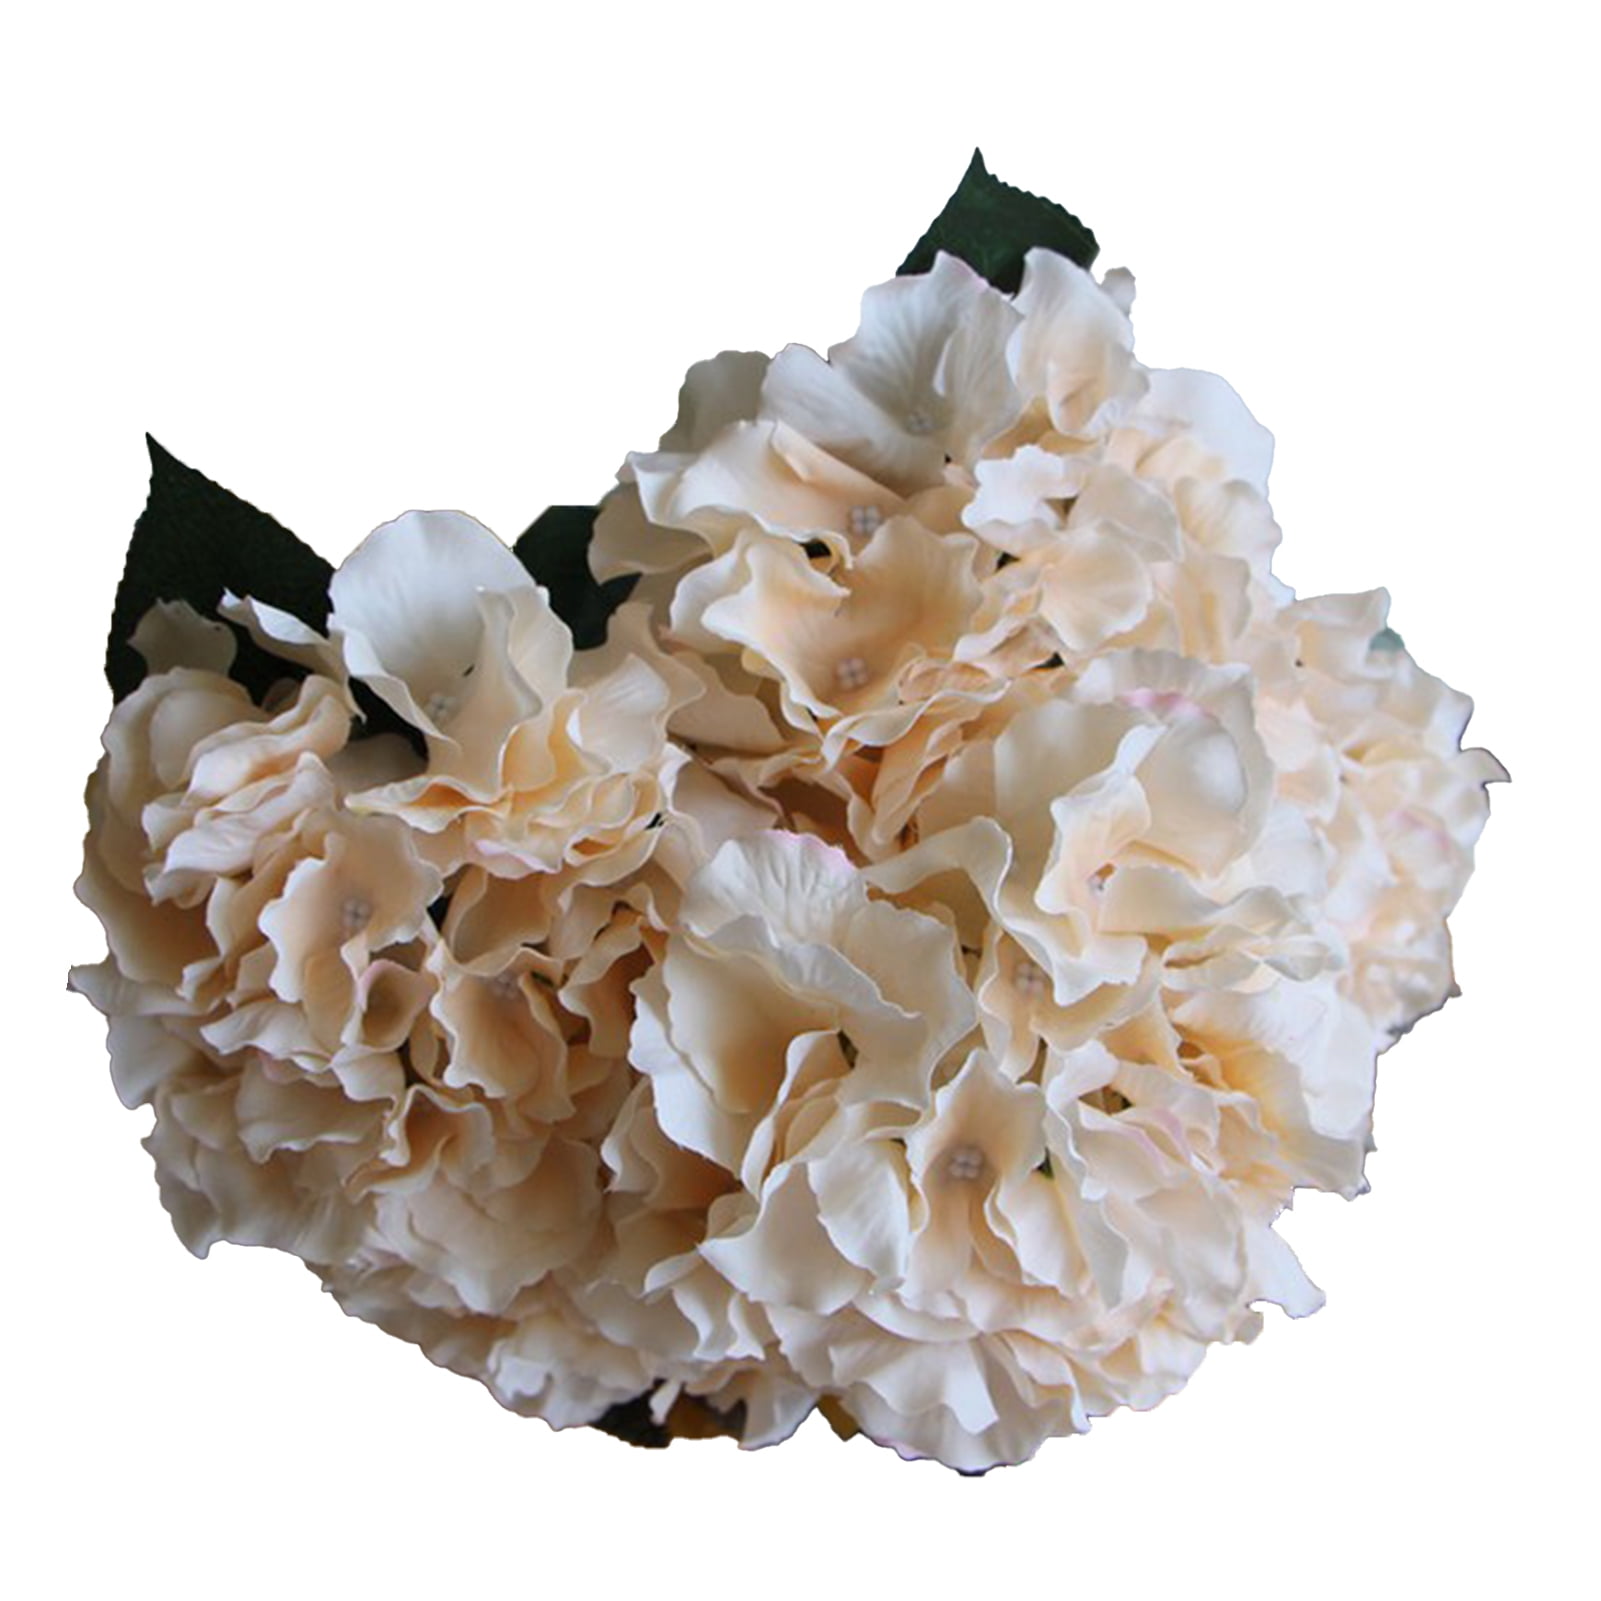 Details about   Artificial Fake Peony Silk Flower Bridal Bouquet Hydrangea Home Wedding Decor